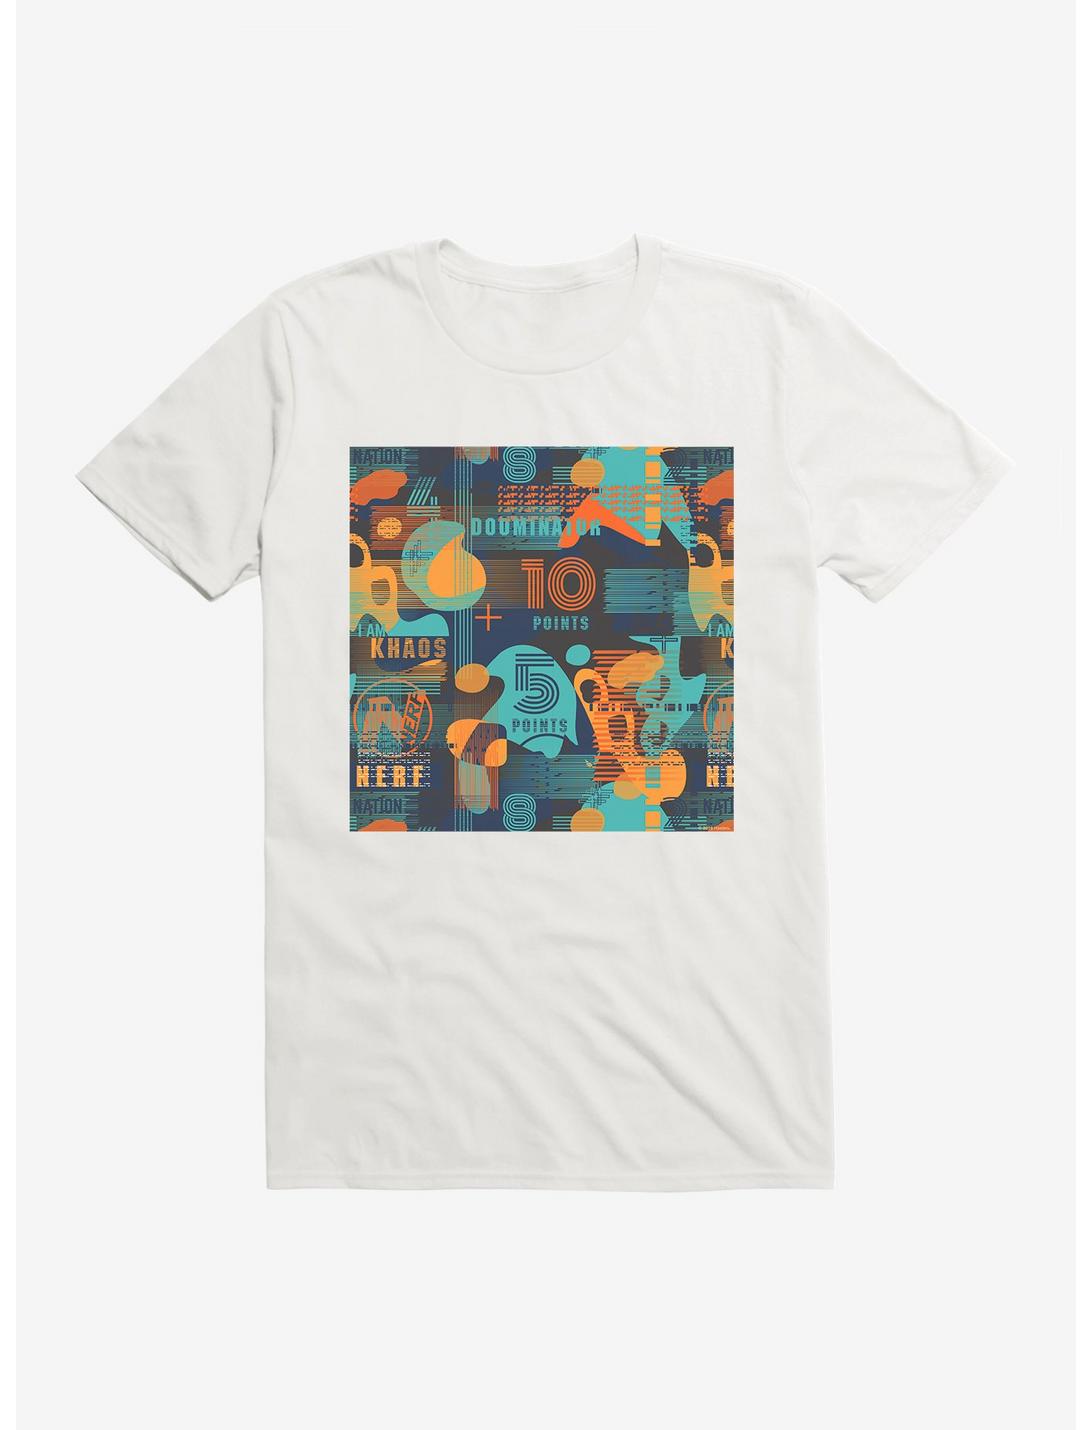 Nerf Doominator T-Shirt, , hi-res